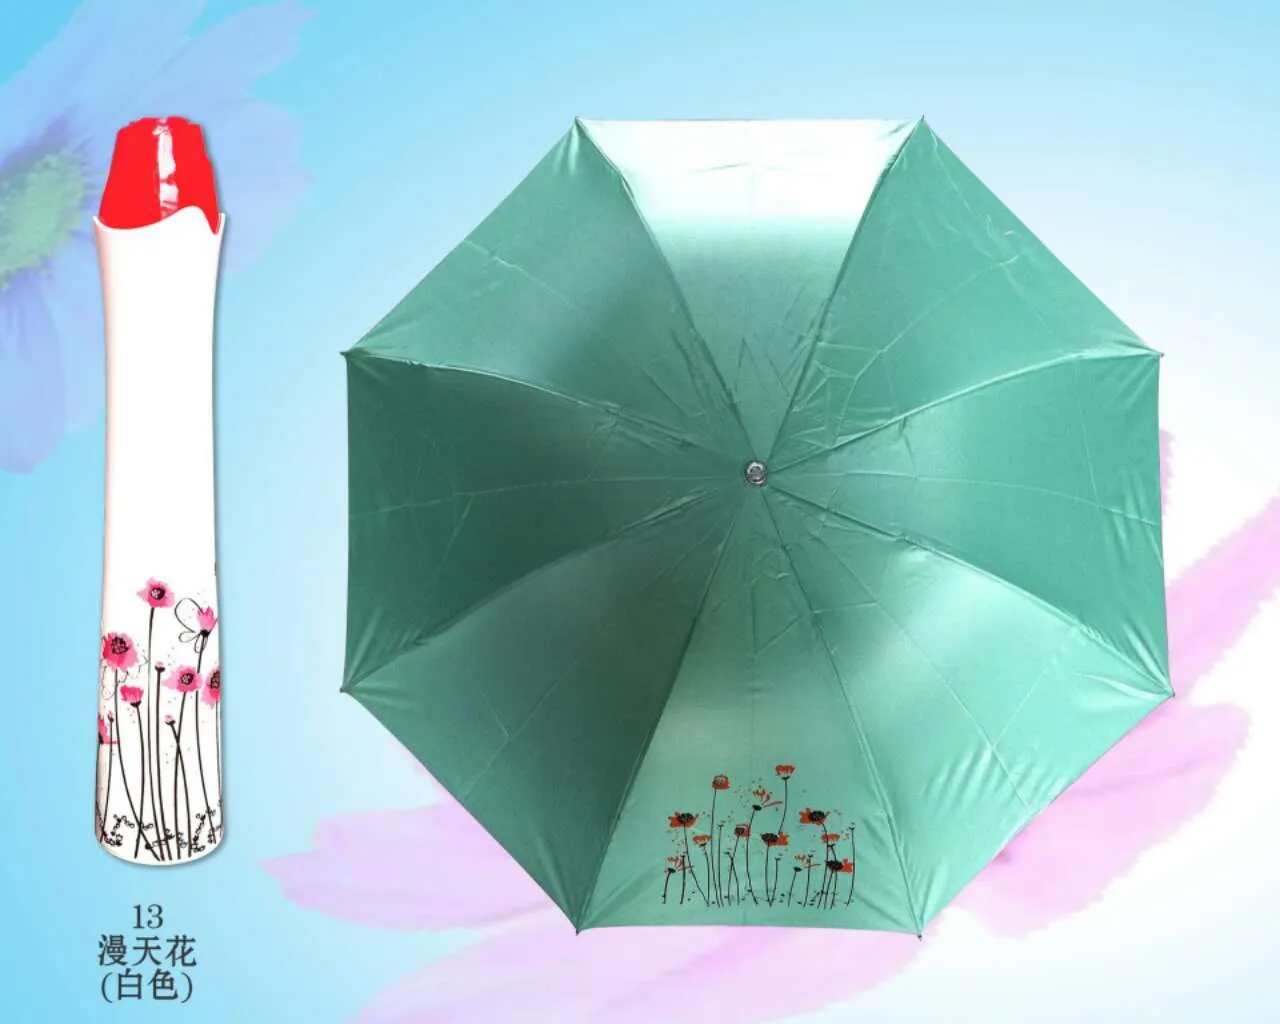 Wine Bottle Umbrella Perfume Rose Flower Vase Umbrella Outdoor Portable Folding Sun-rain beach Umbrella DHL free